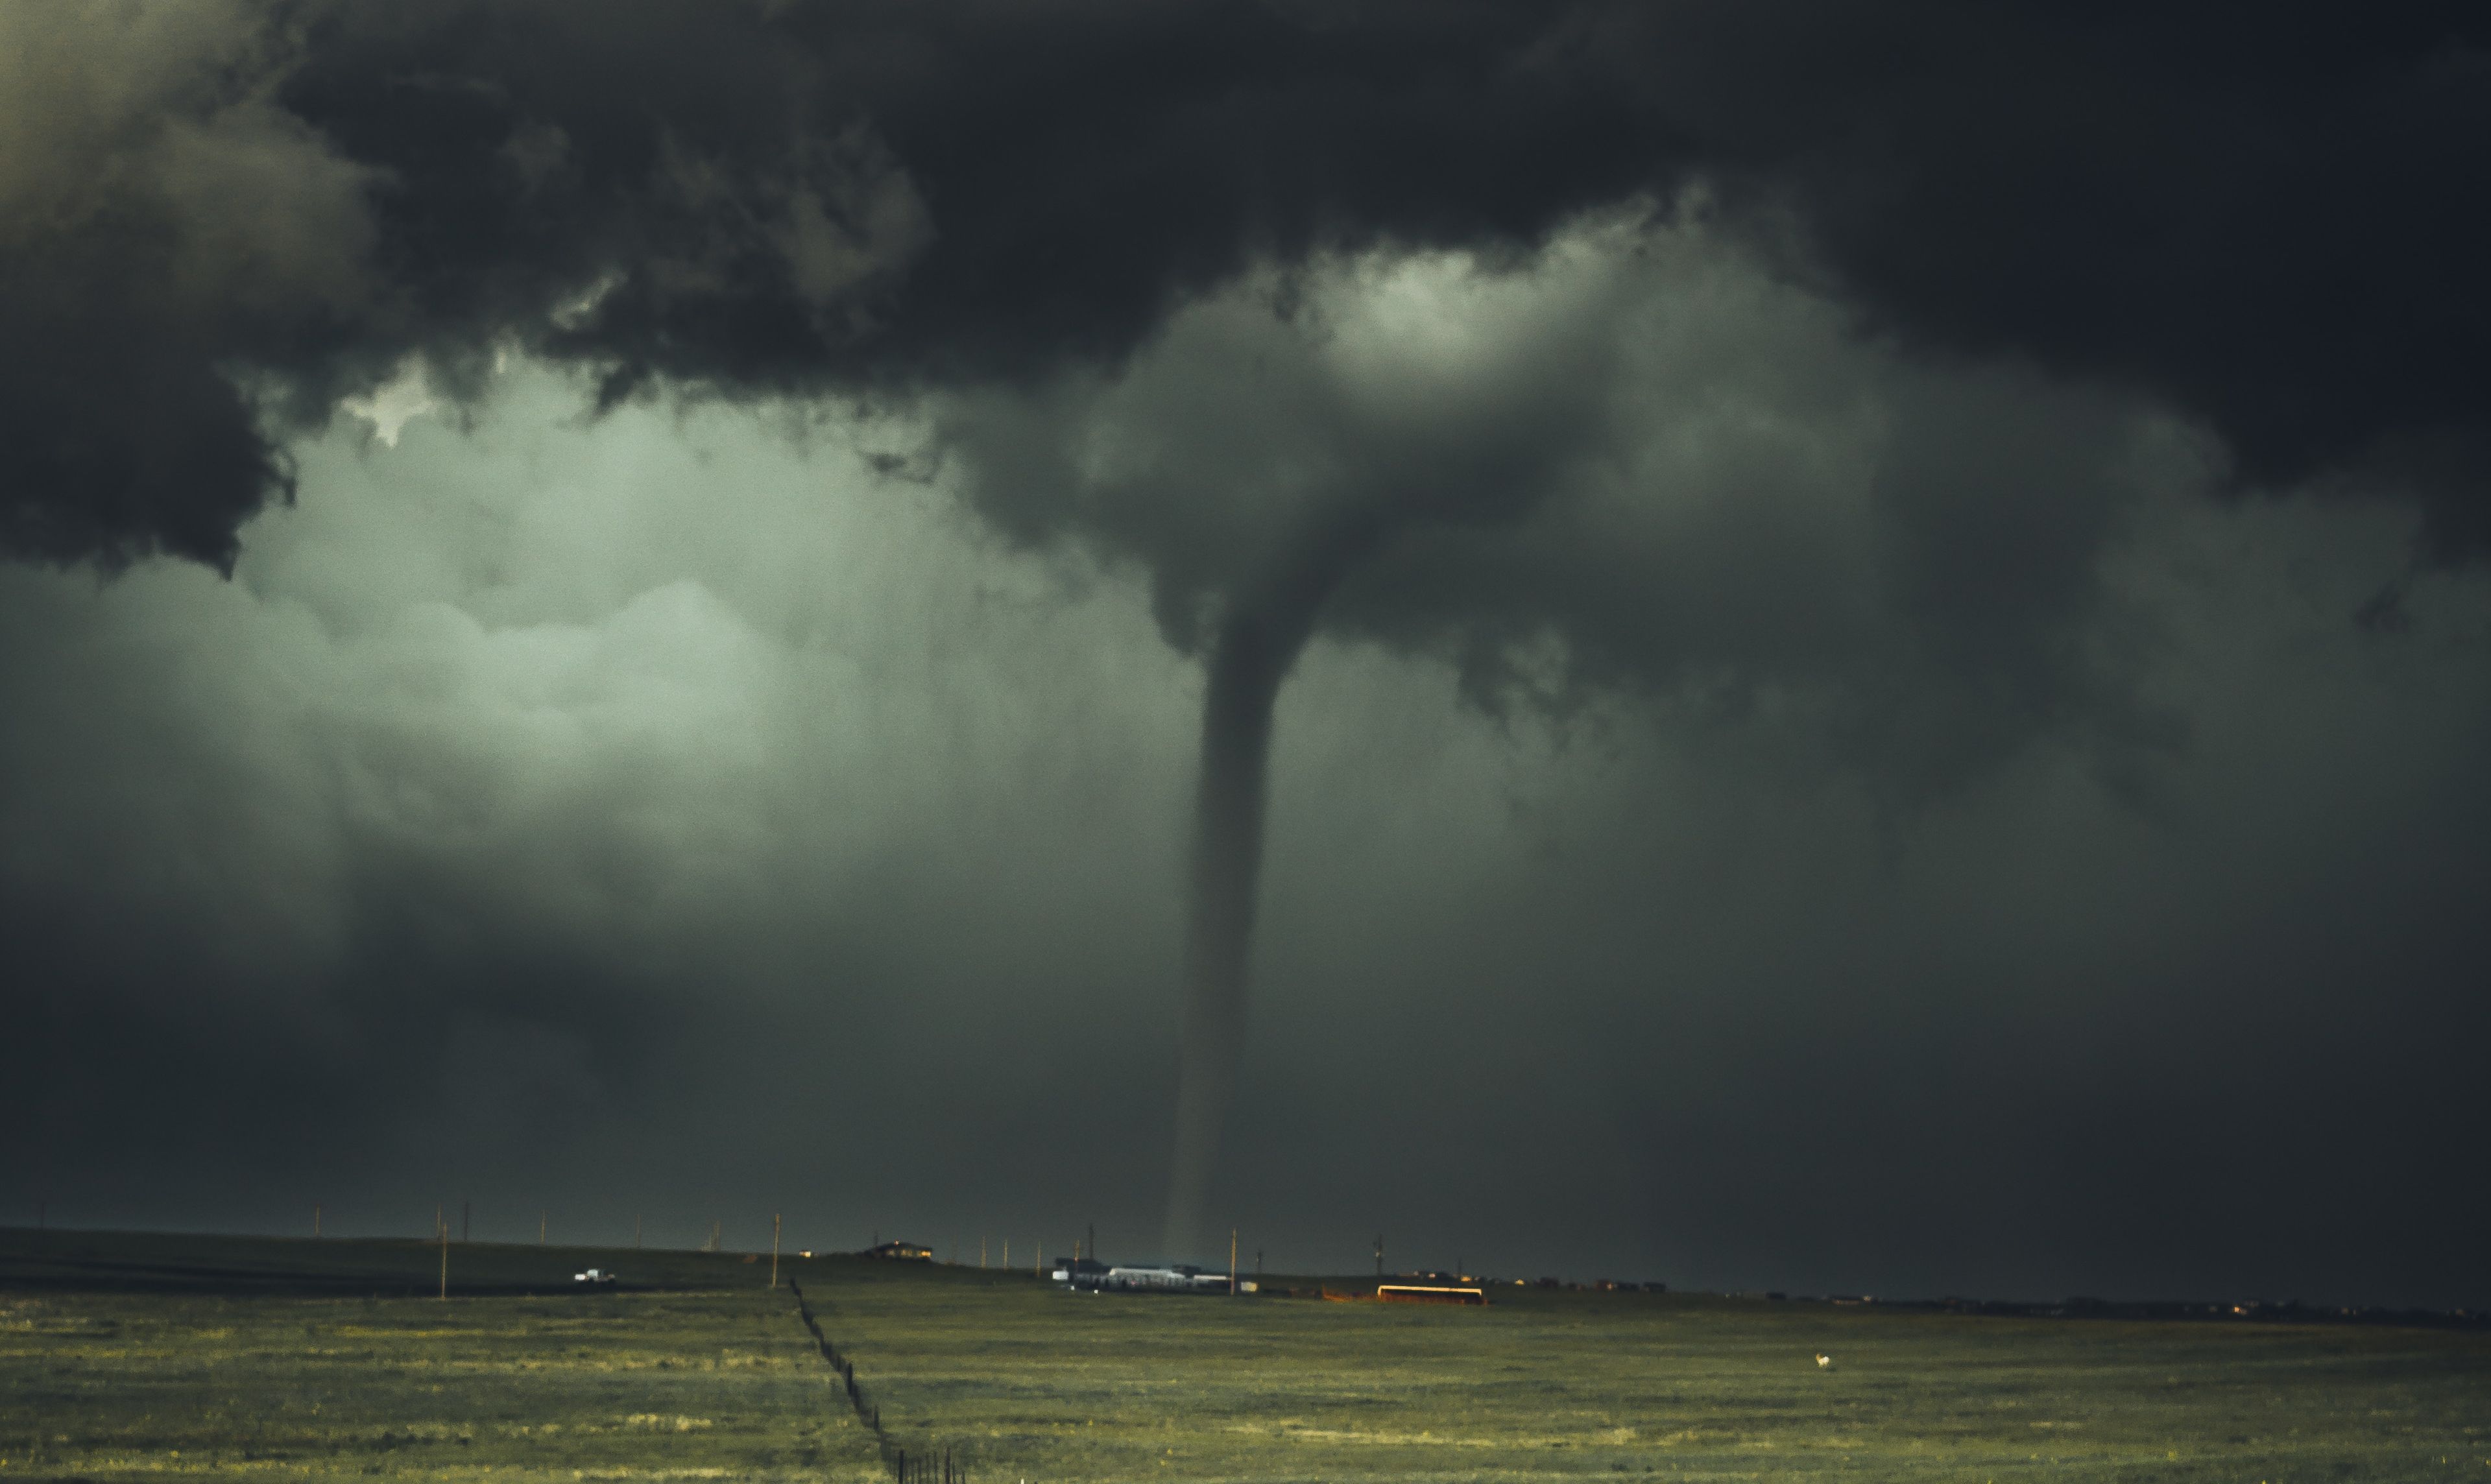 Tornado photo by Nikolas Noonan on Unsplash